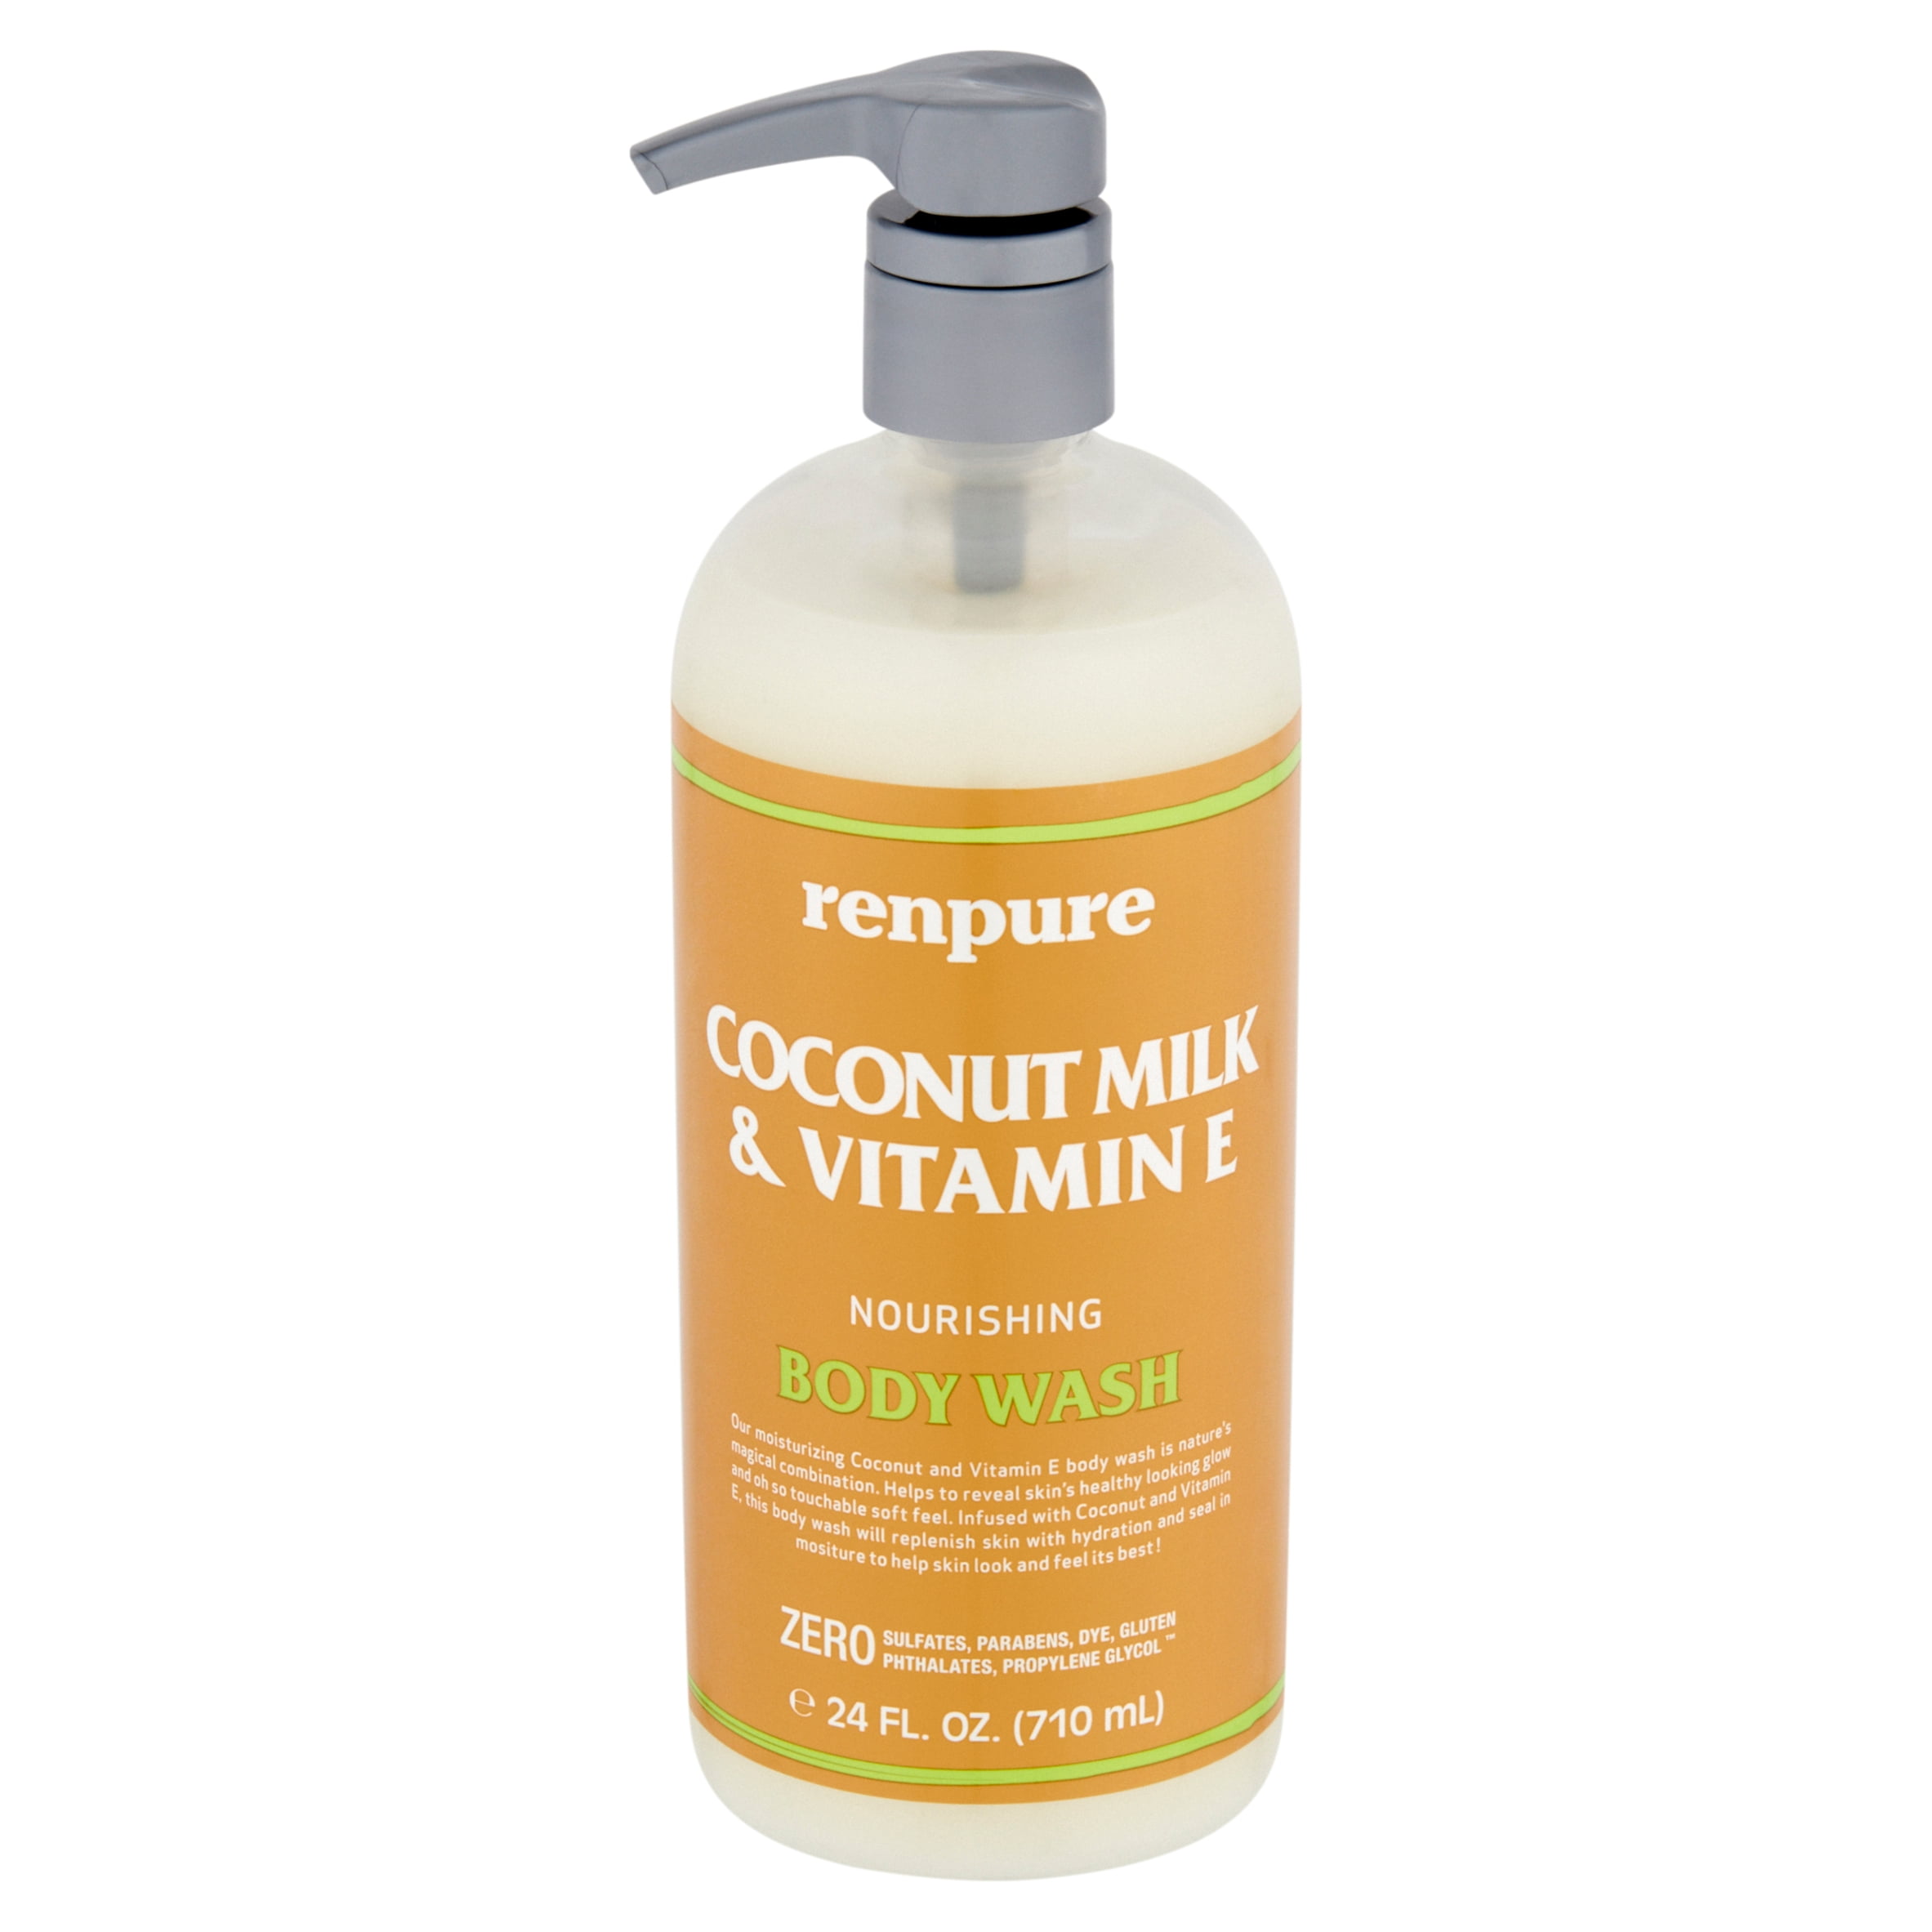 Renpure Coconut Milk & Vitamin E Nourishing Body Wash, 24 fl oz